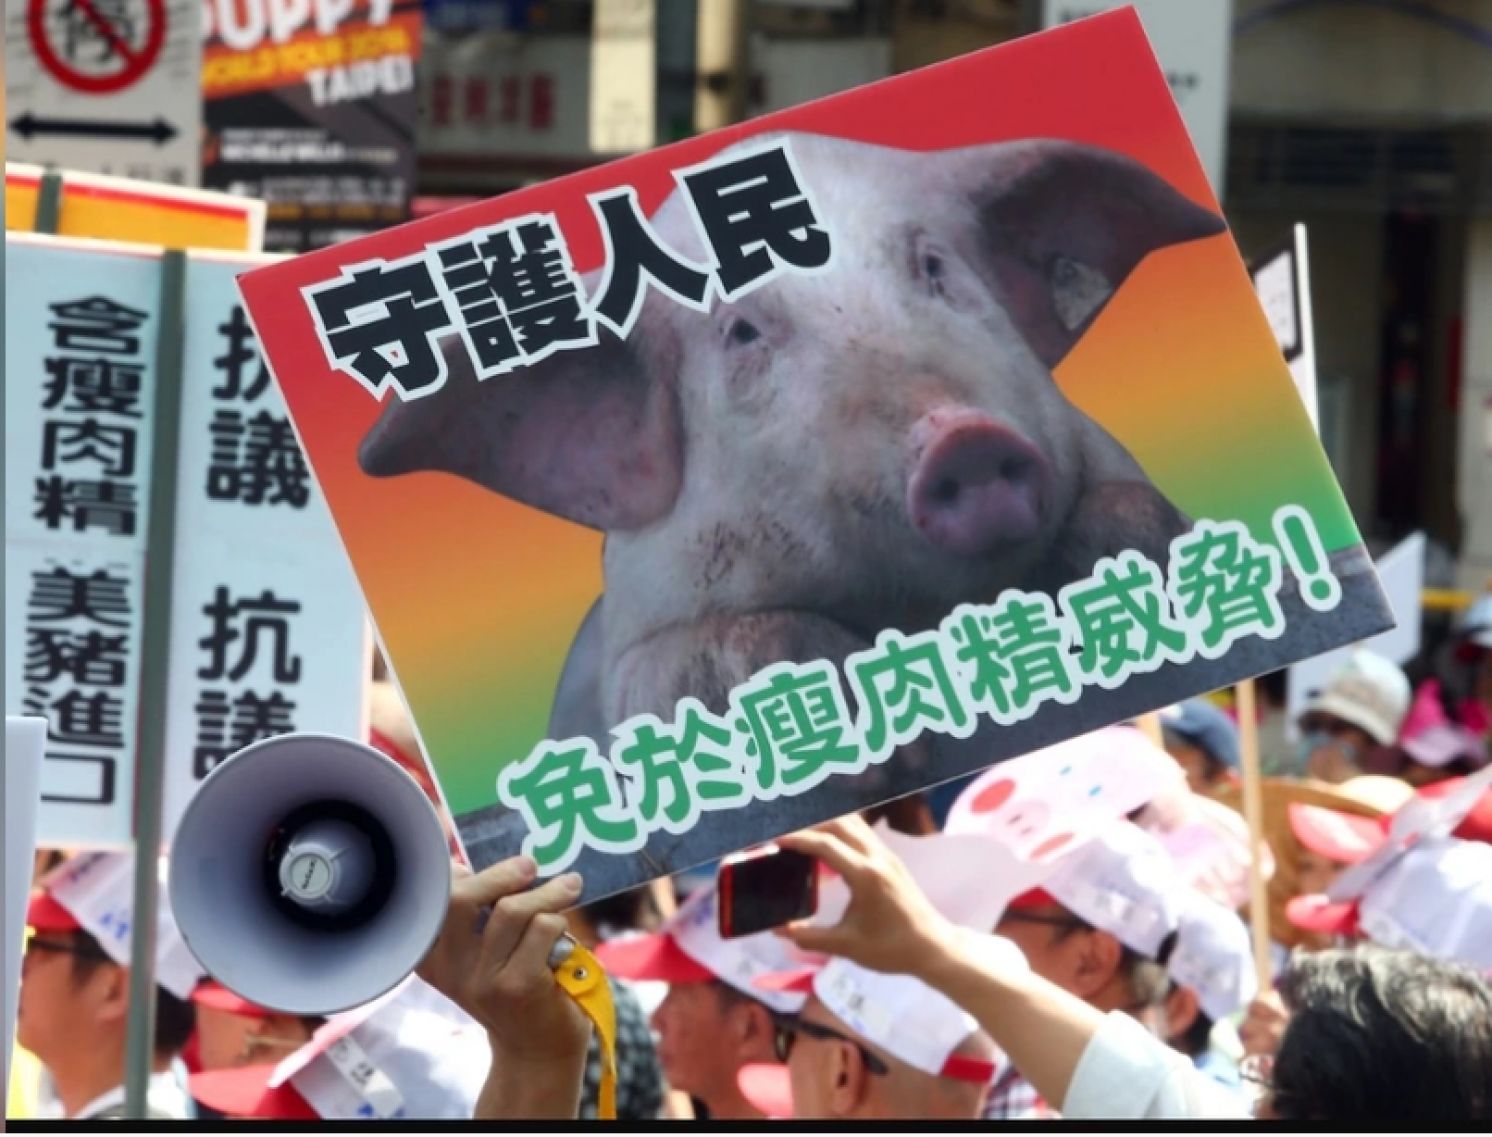 President Tsai Proves DPP Misled Taiwan on U.S. Pork Import Policy